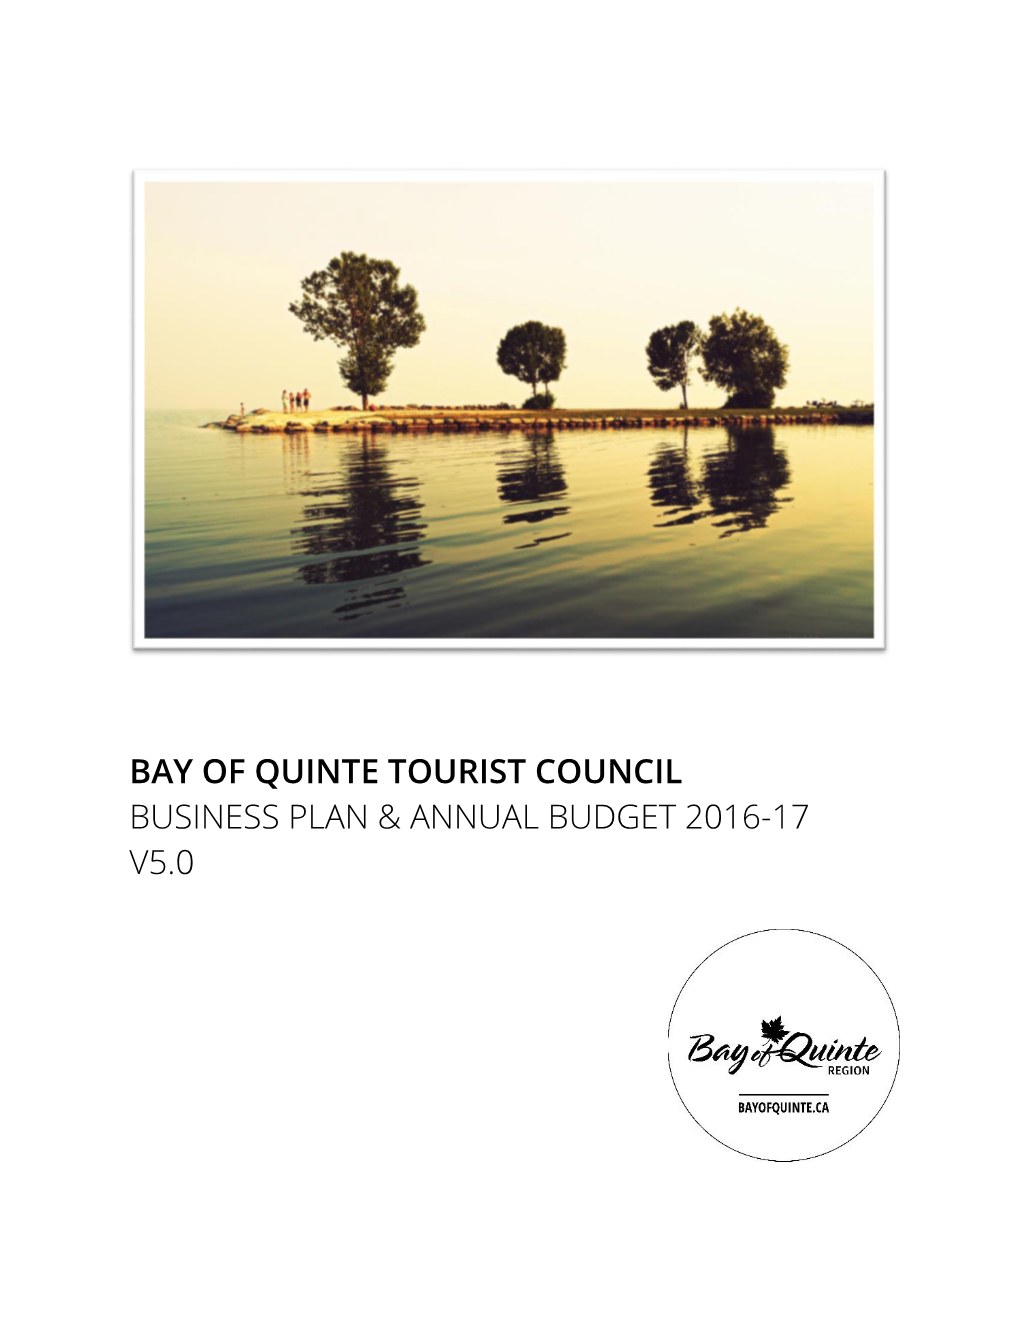 Bay of Quinte Tourist Council Business Plan & Annual